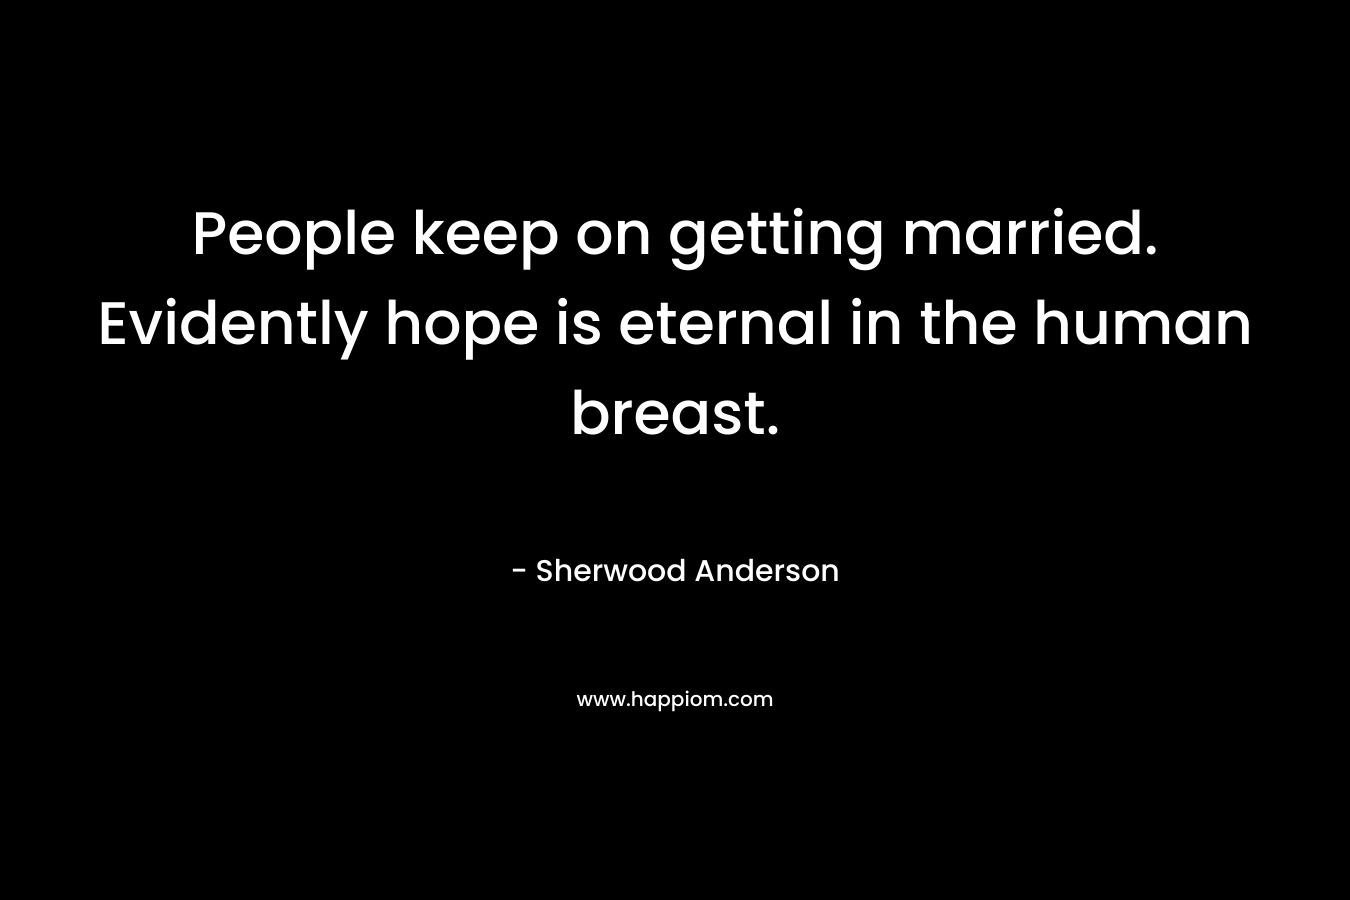 People keep on getting married. Evidently hope is eternal in the human breast.